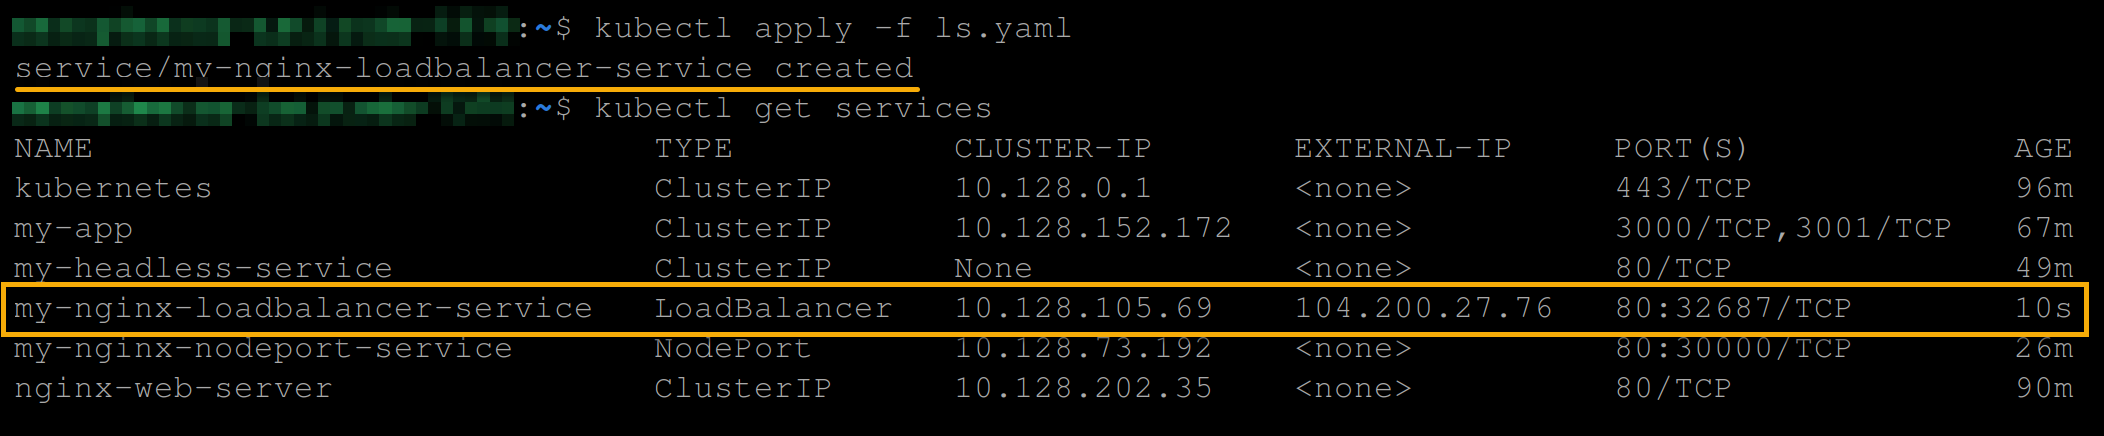 Creating and viewing the LoadBalancer service type (my-nginx-loadbalancer-service) 